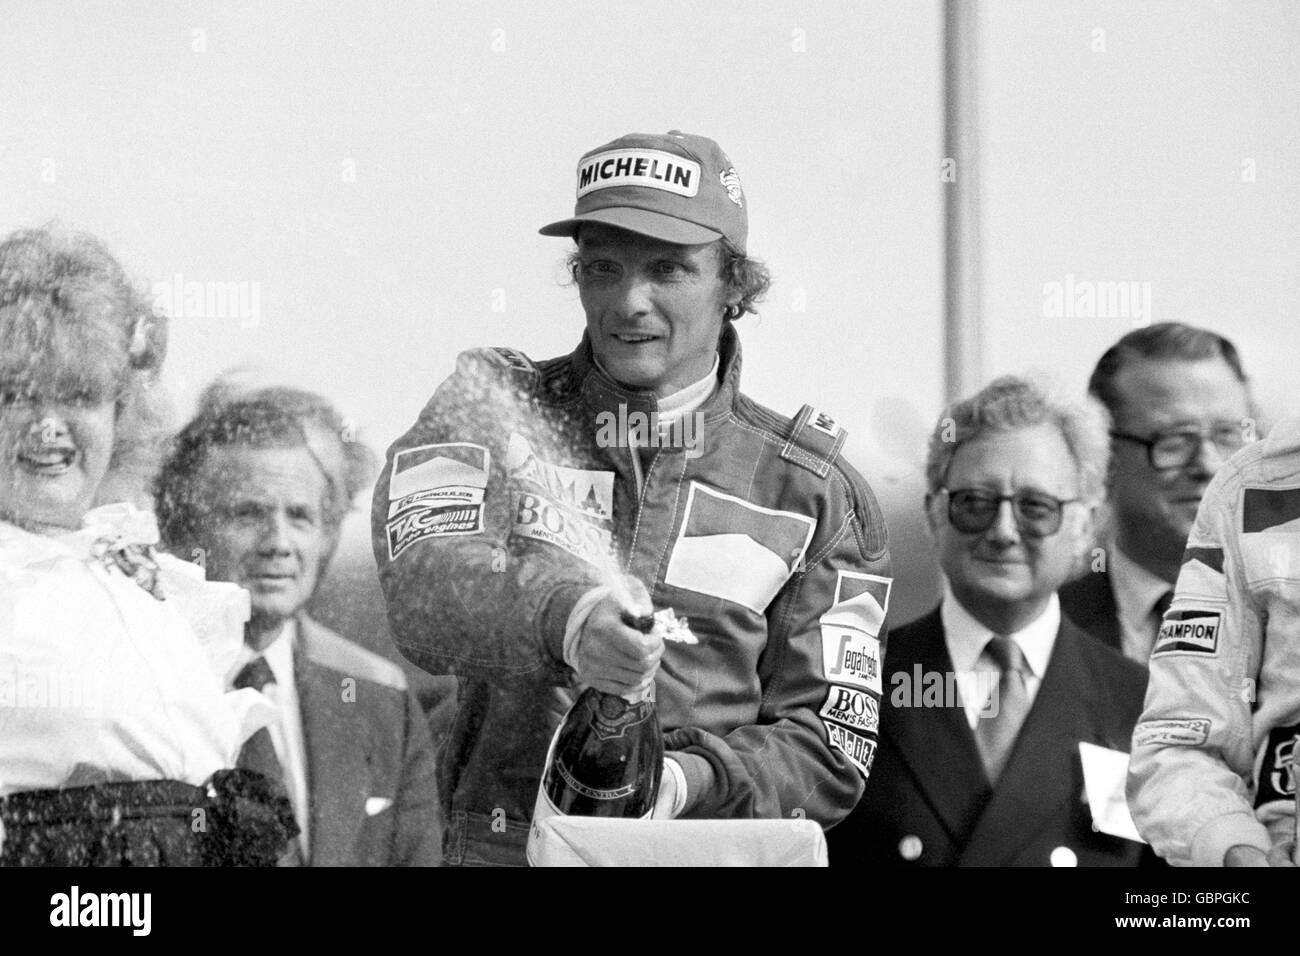 Formula uno Motor Racing - Gran Premio di Gran Bretagna - Brands Hatch. L'austriaco Niki Lauda celebra la vittoria nel Gran Premio di Gran Bretagna a Brands Hatch dopo aver vinto la sua Marlboro McLaren Foto Stock